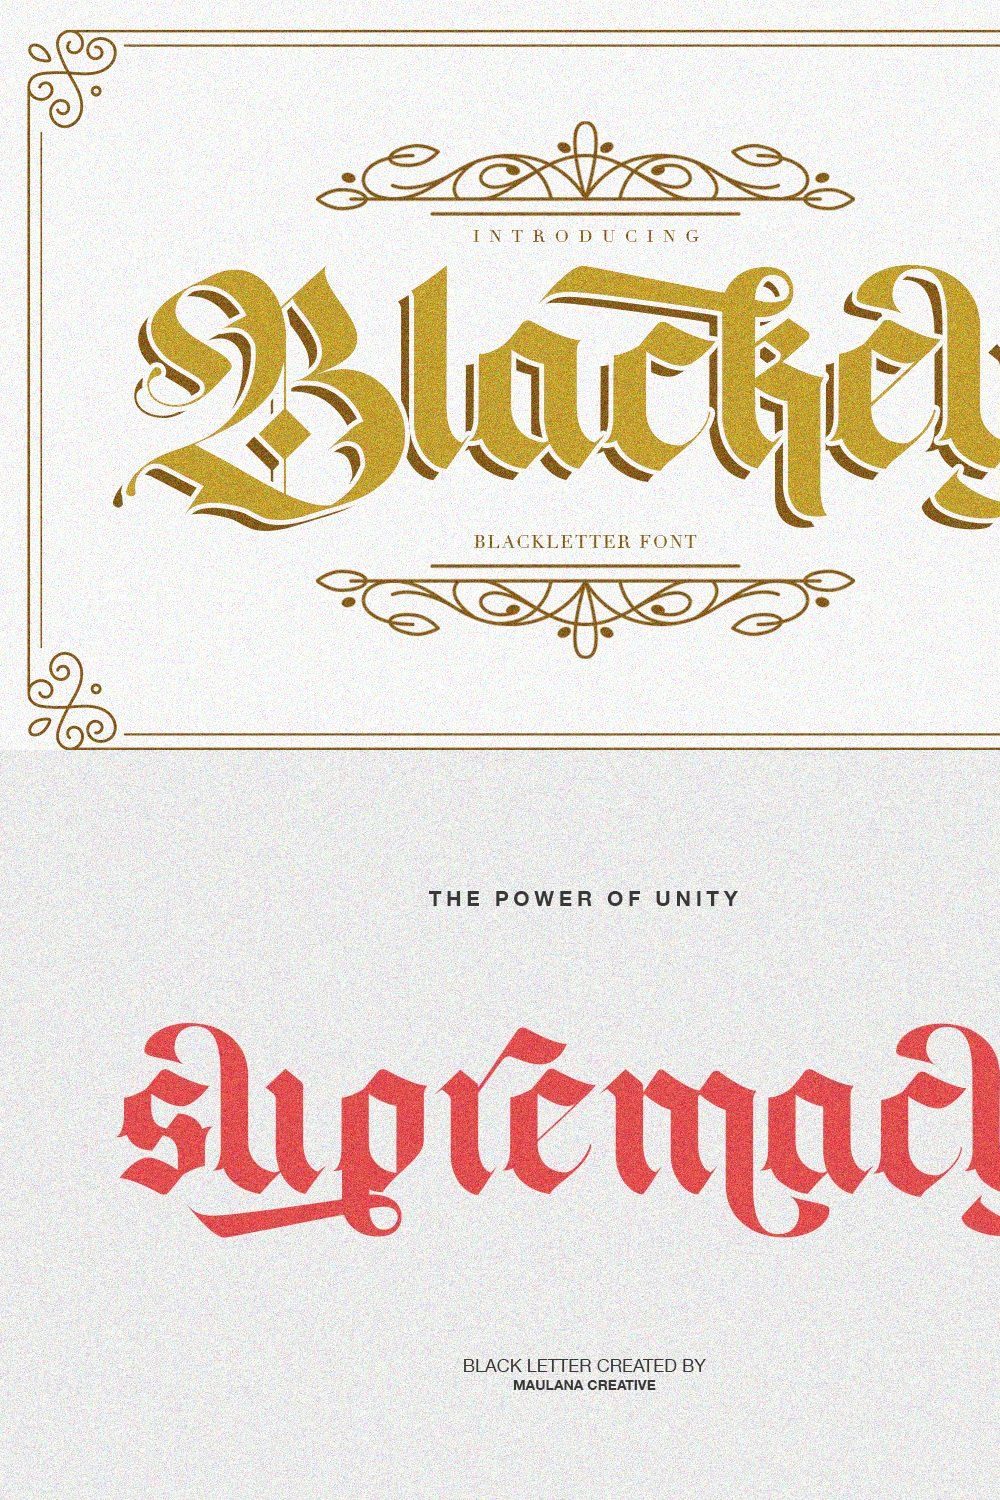 Blackey Blackletter Font pinterest preview image.